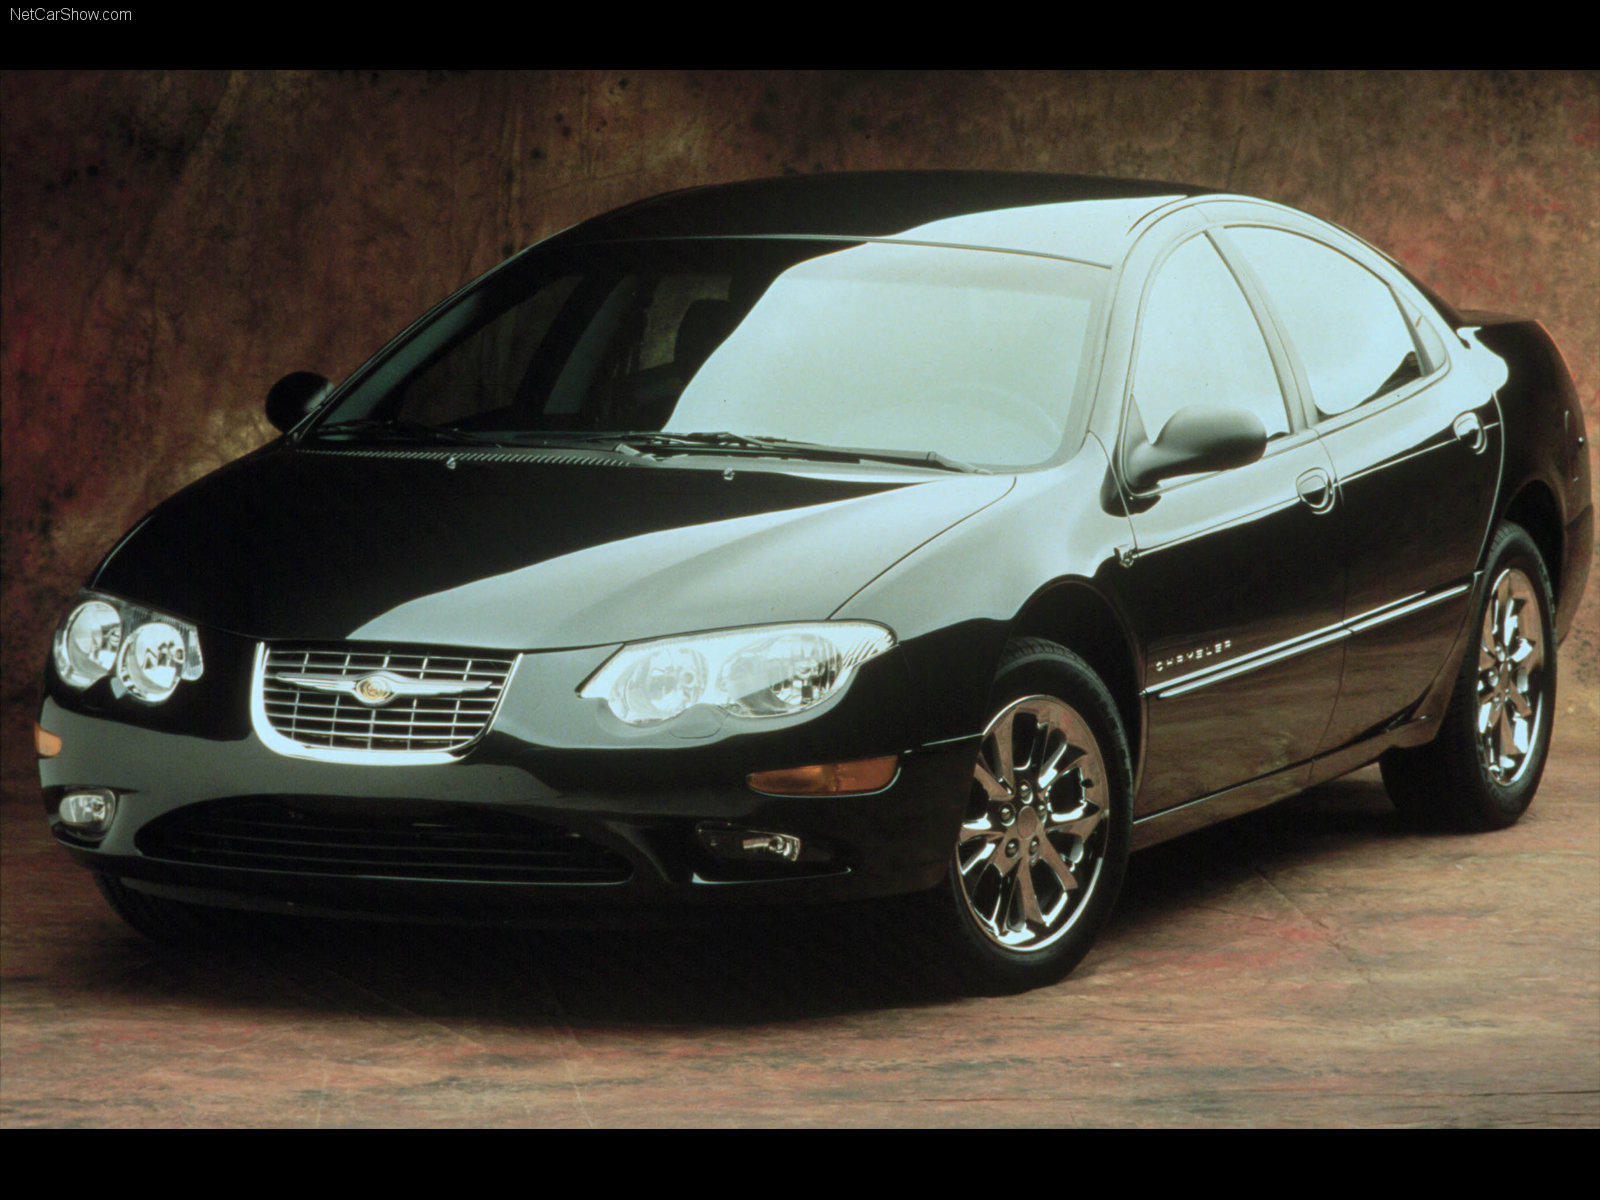 Chrysler 300M  2.7 i V6 24V 203 KM - dane techniczne, wymiary, spalanie i opinie